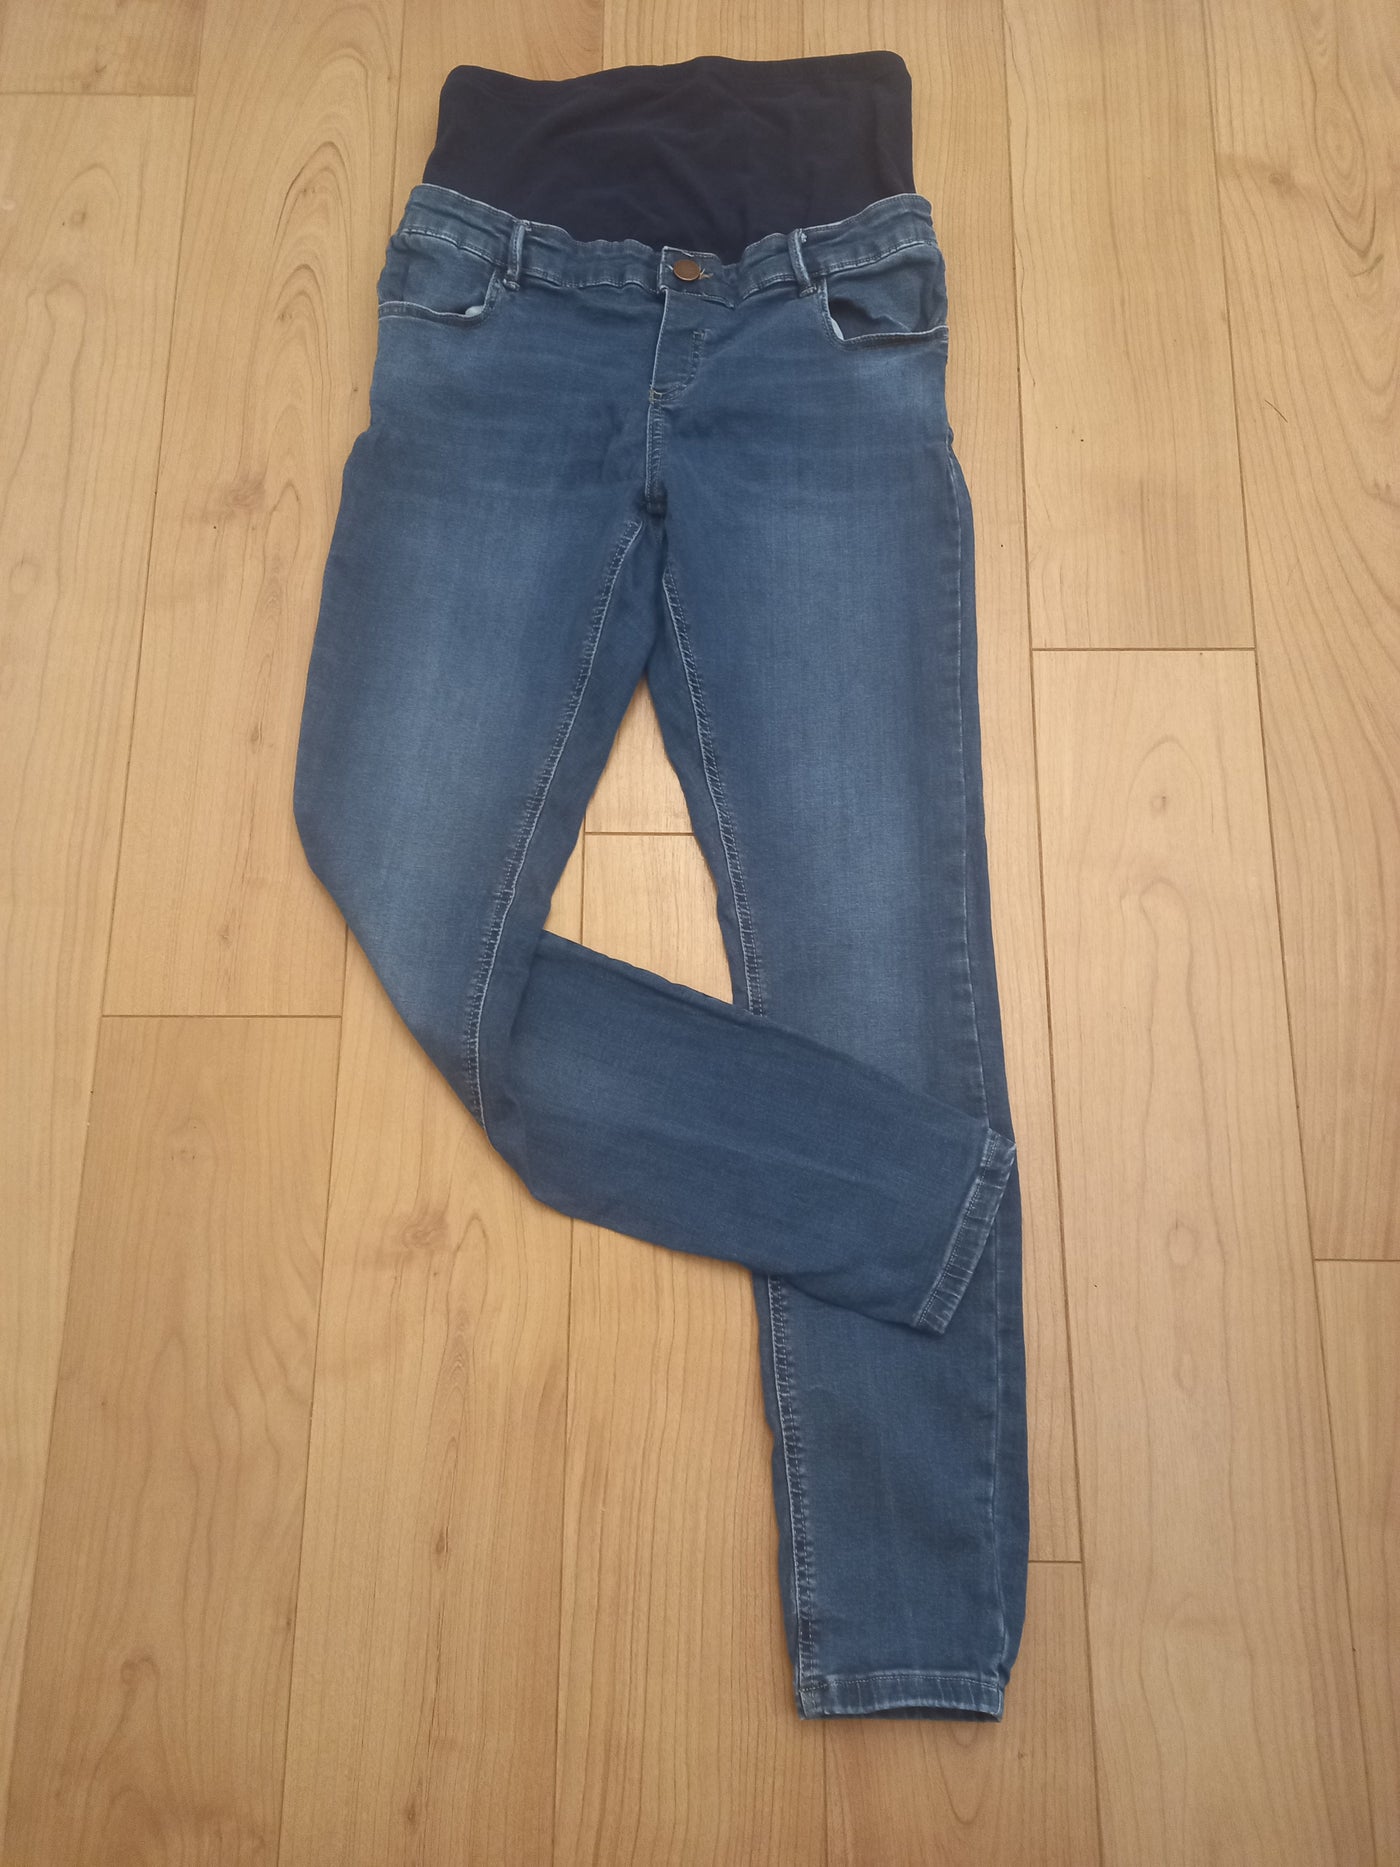 Asos Maternity blue overbump jeans - Size 12